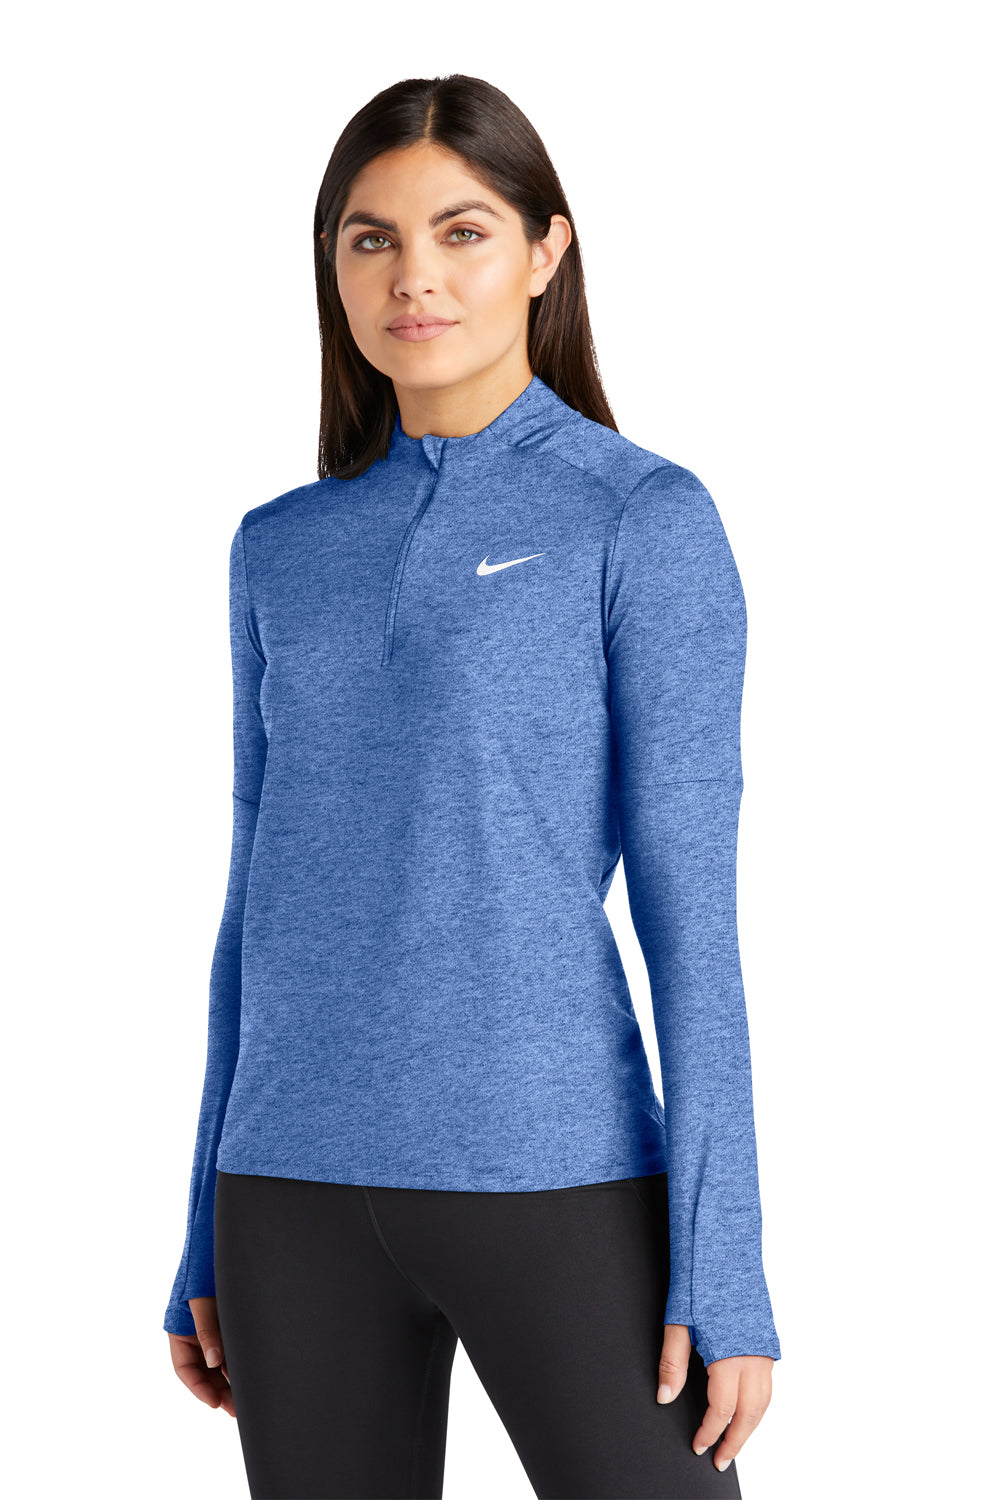 Nike NKDH4951 Womens Element Dri-Fit Moisture Wicking 1/4 Zip Sweatshirt Heather Royal Blue Model 3Q